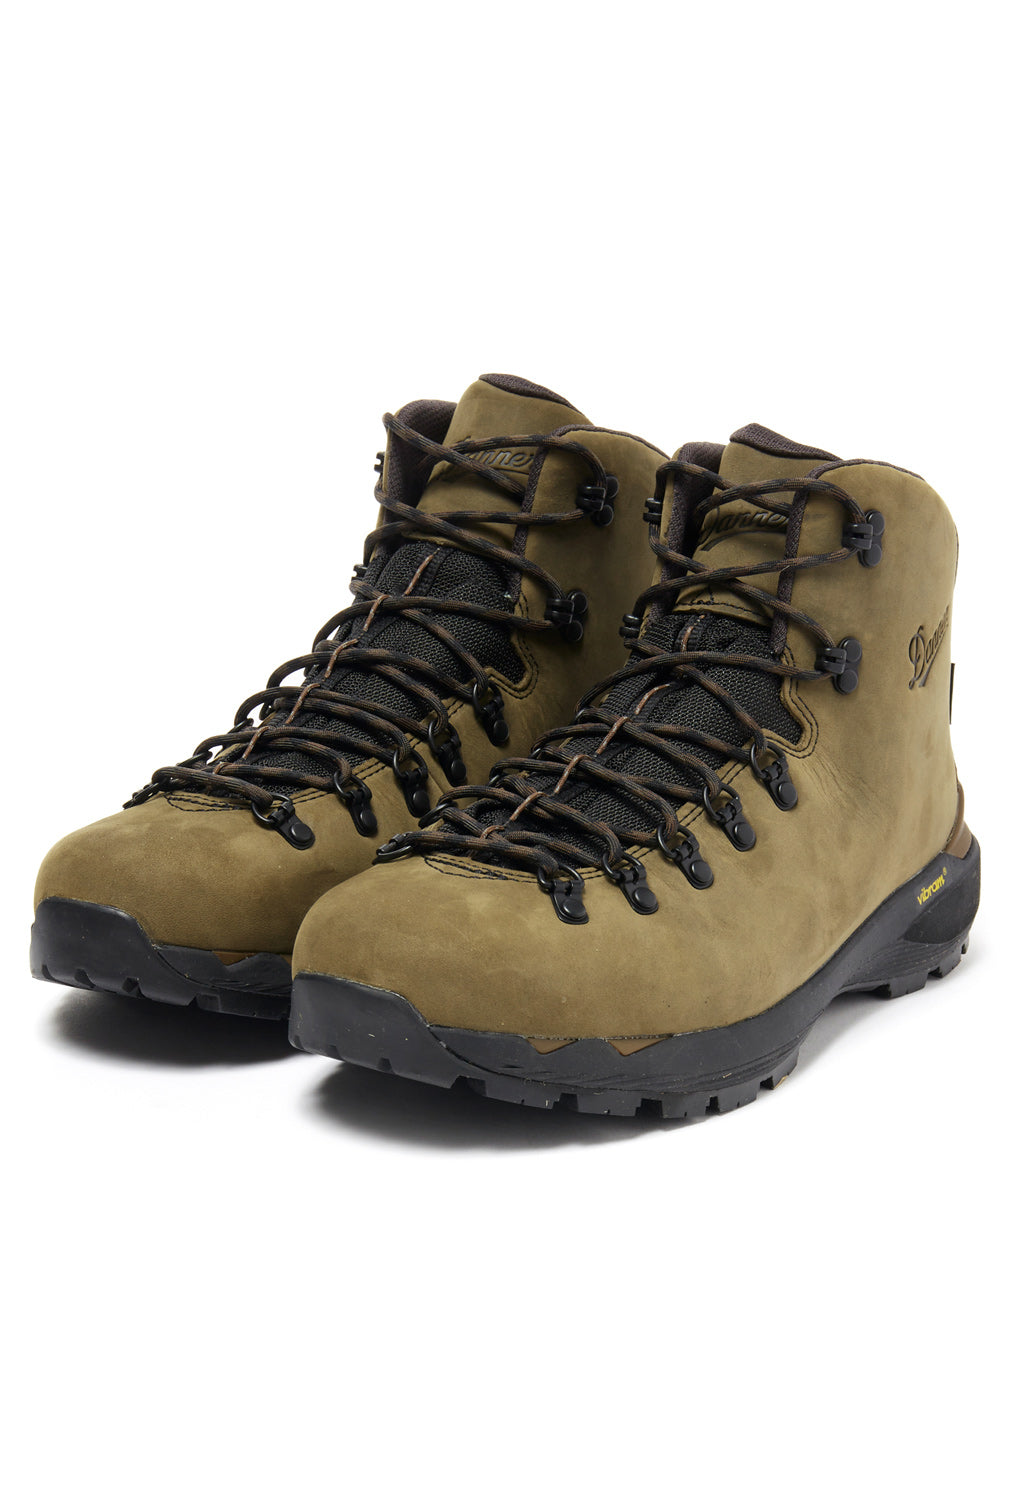 Danner Men's Mountain 600 EVO GTX Boots - Topsoil Brown / Black